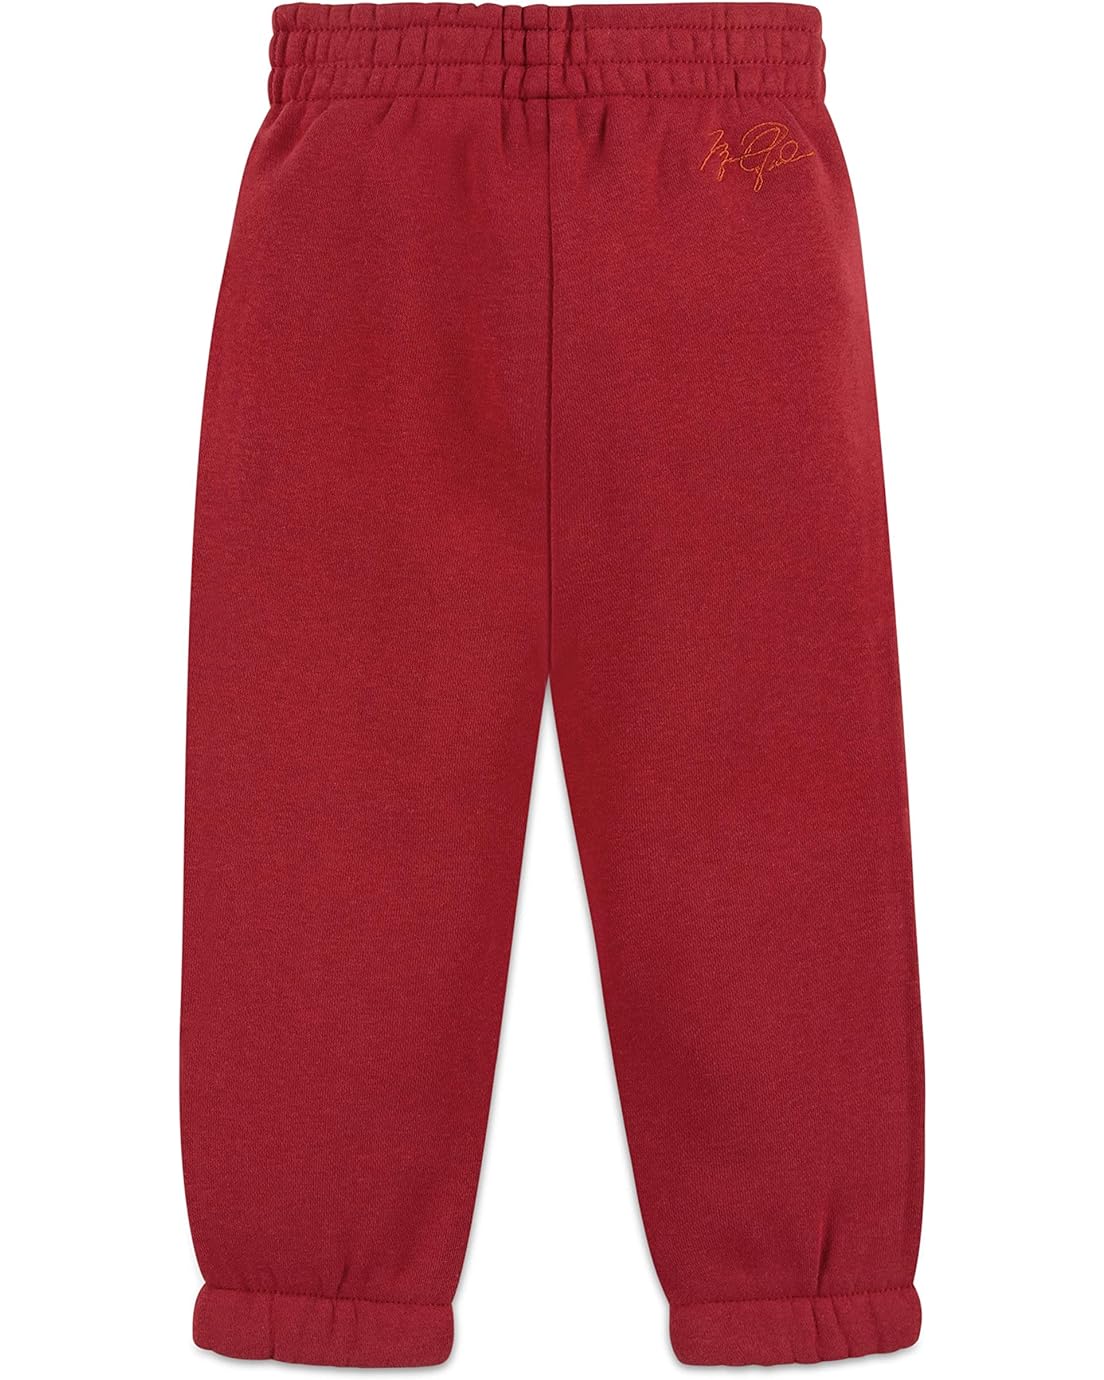  Jordan Kids Essentials Pants (Toddler)